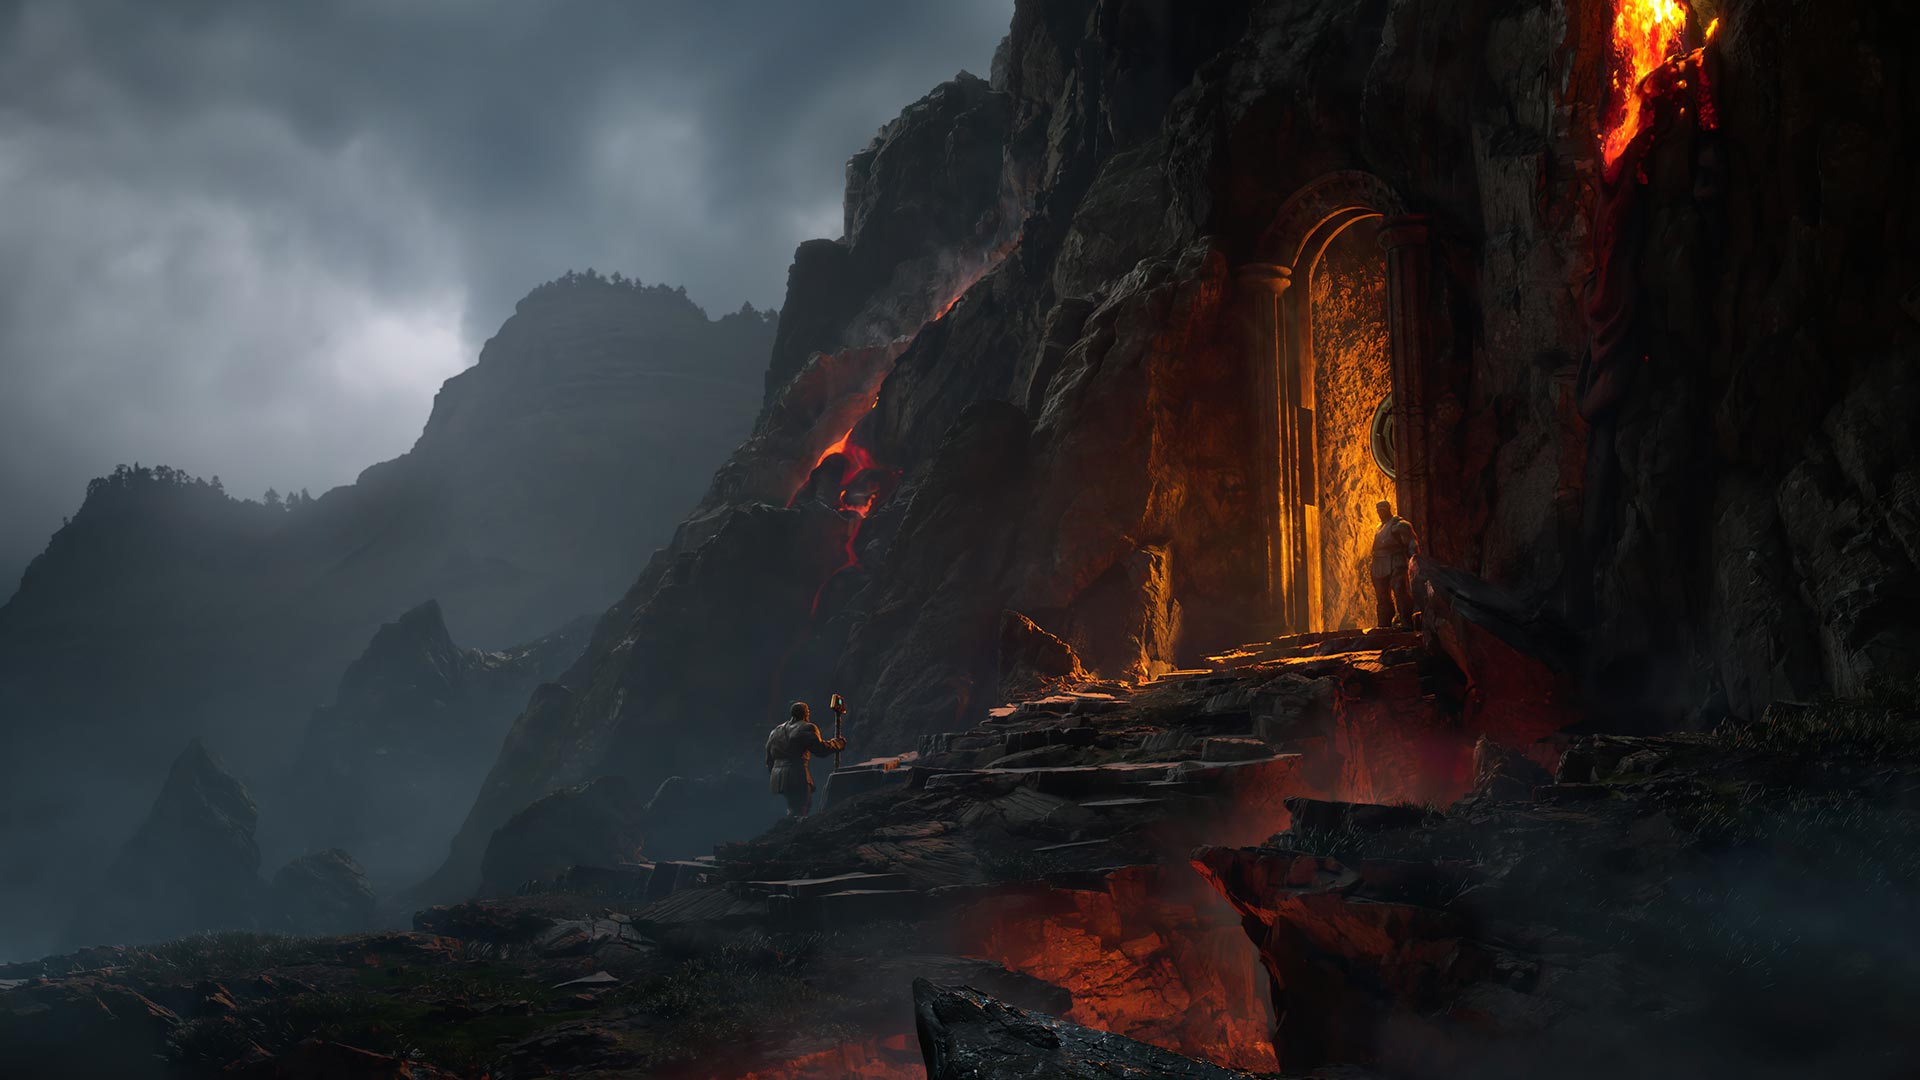 Video Game World of Warcraft: Dragonflight HD Wallpaper | Background Image